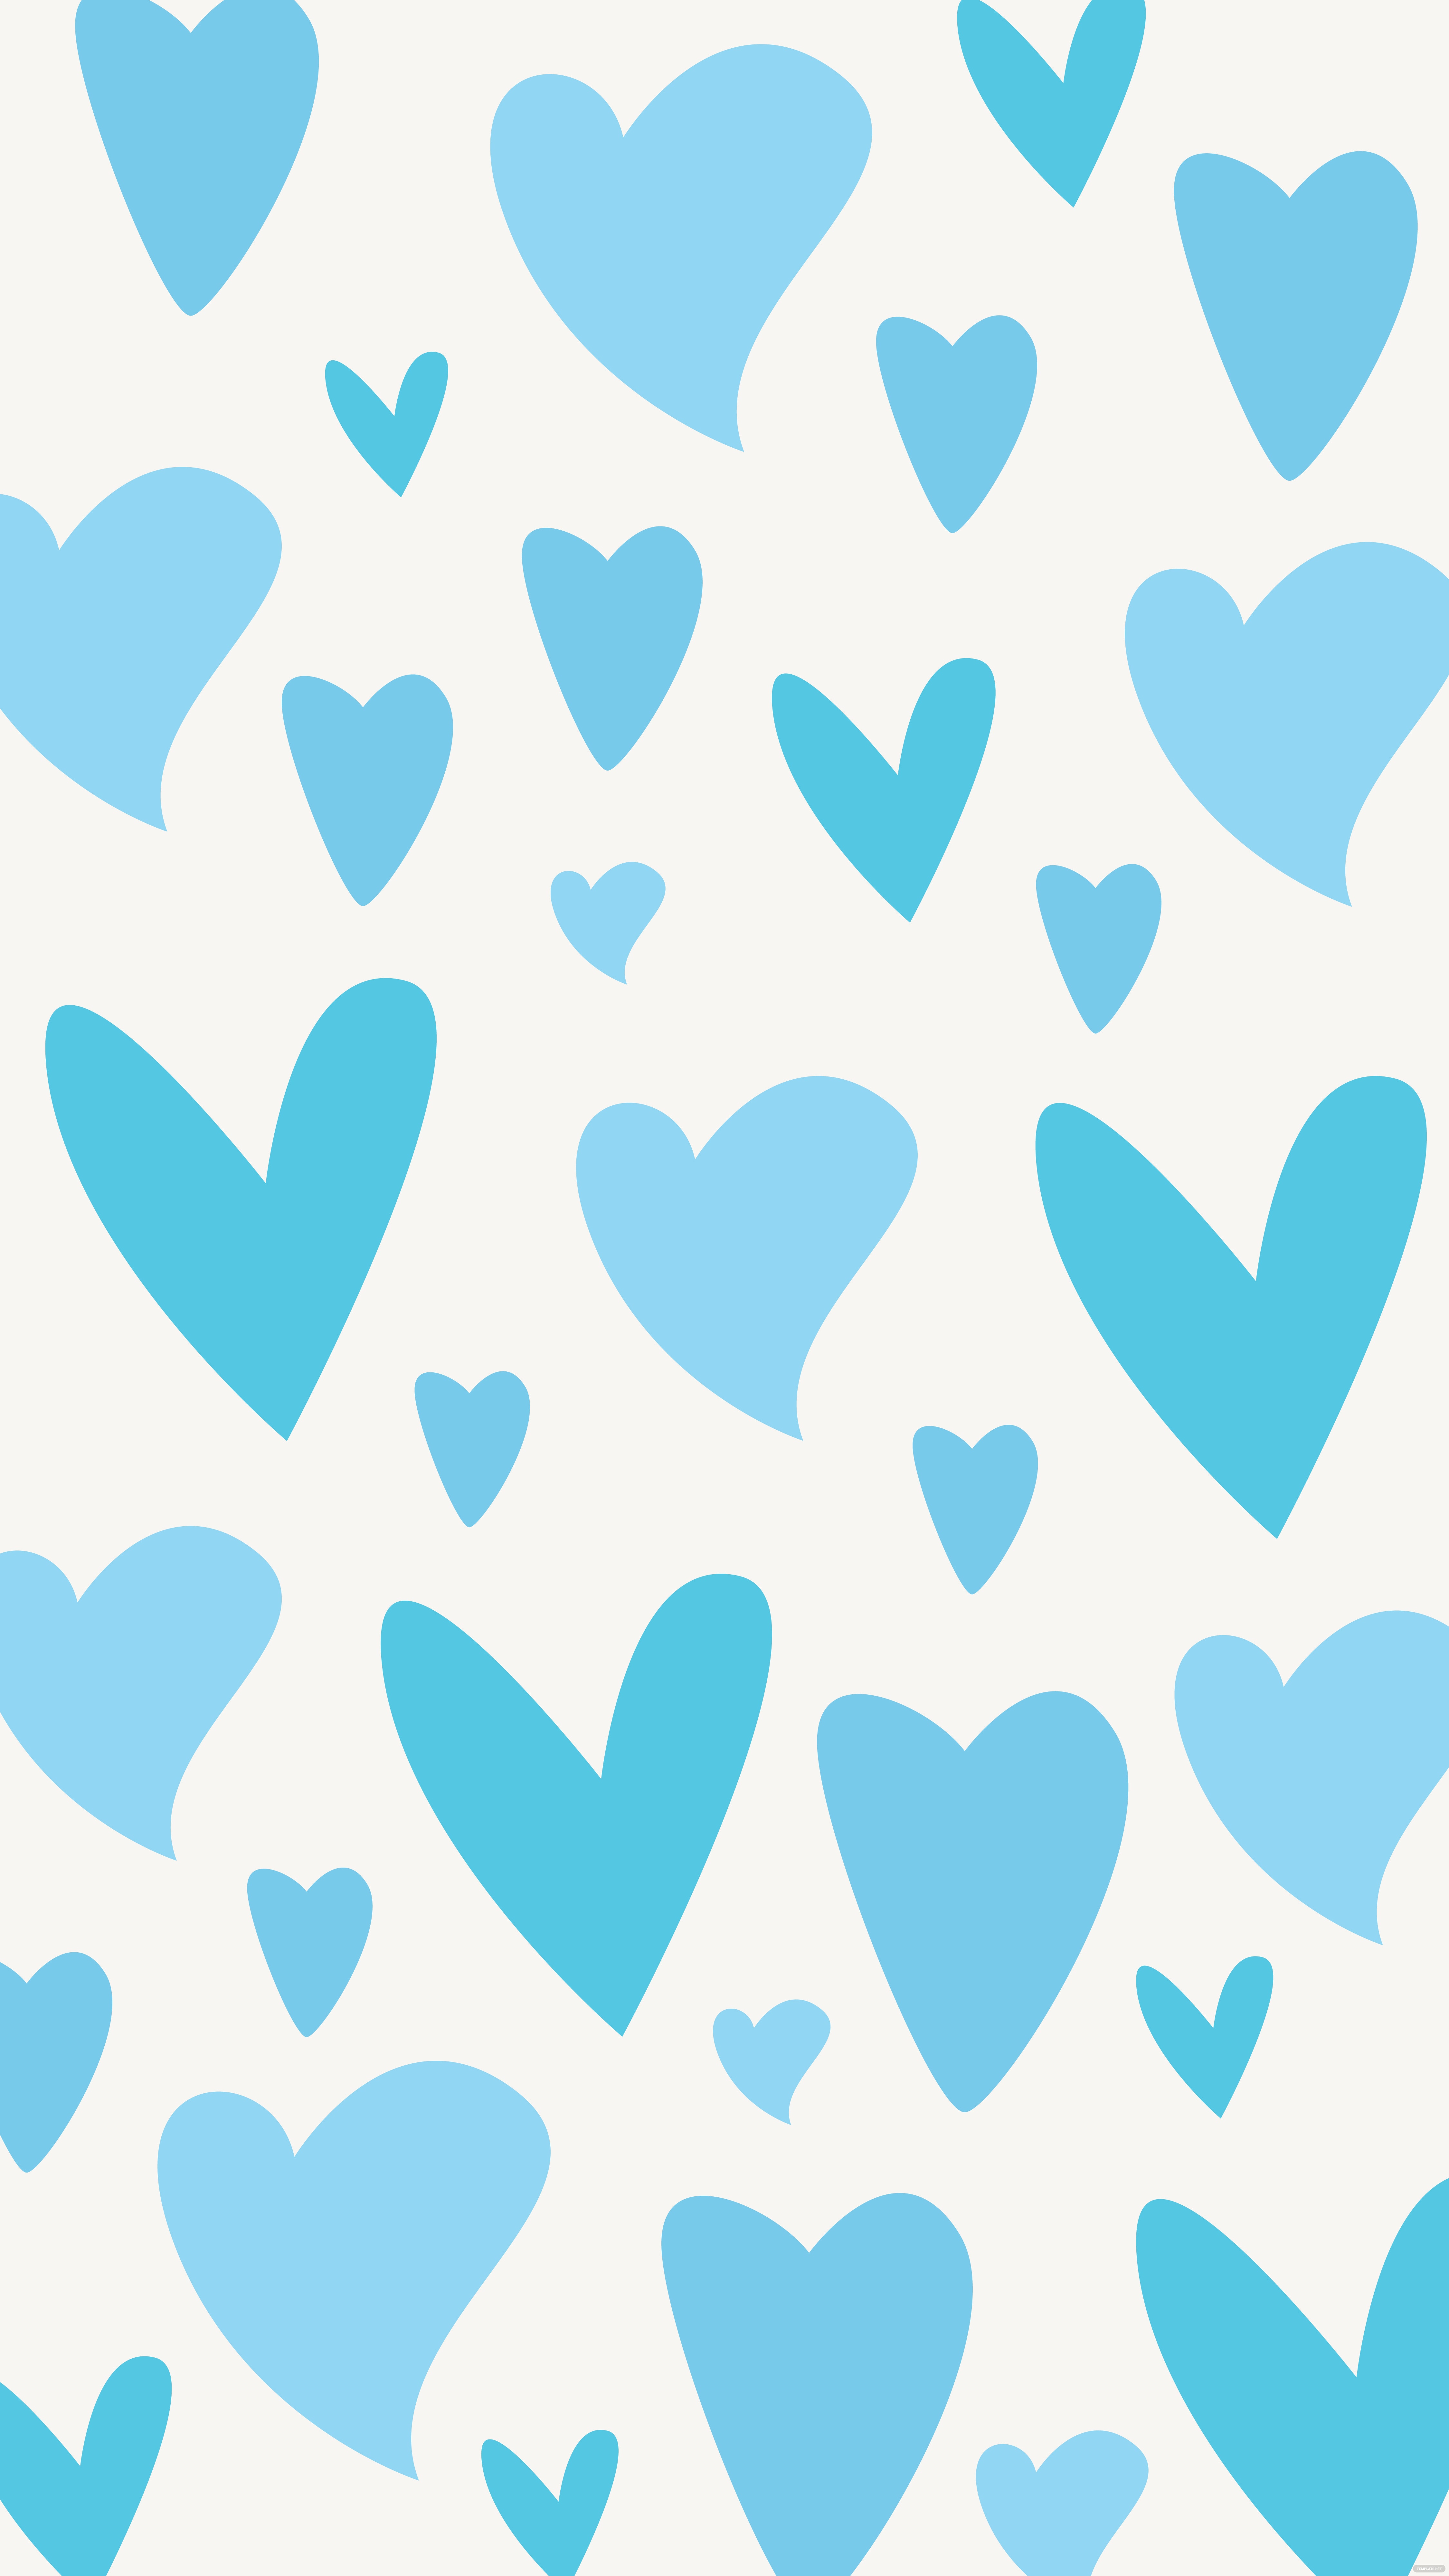 Free Pastel Blue Heart Background, Illustrator, JPG, SVG